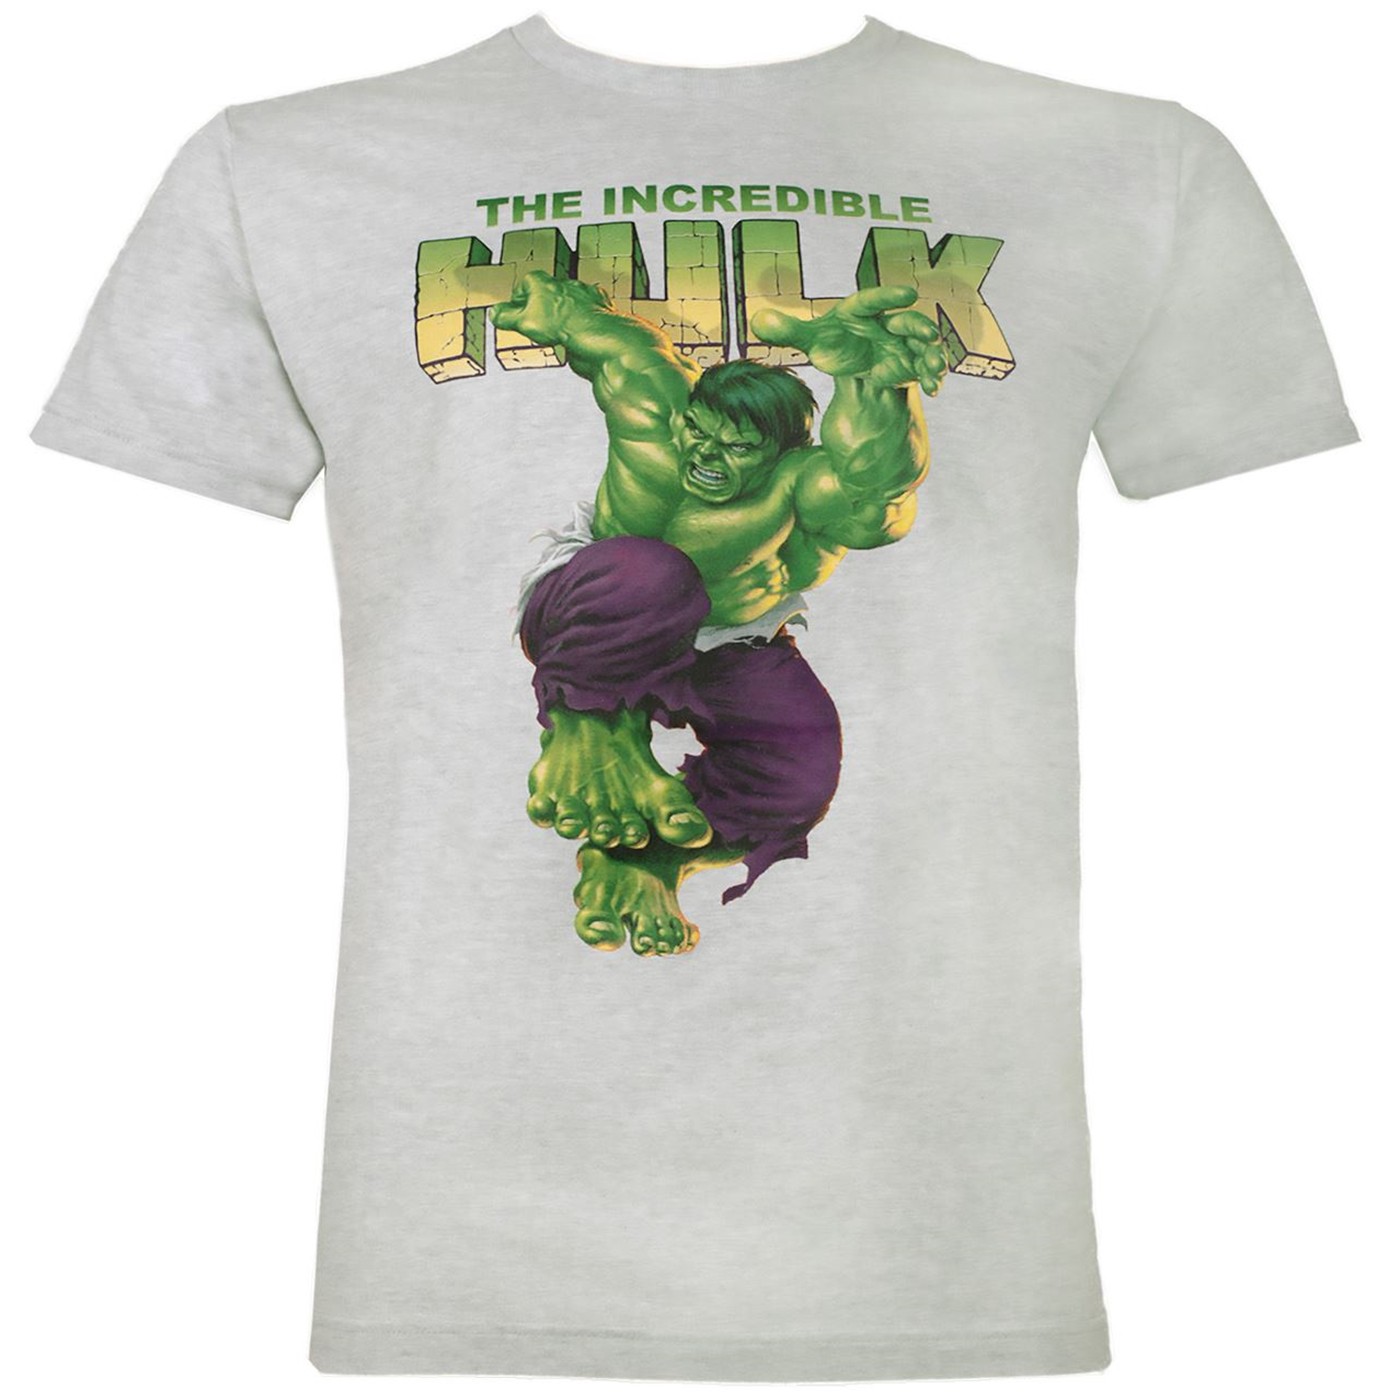 The Incredible Hulk Jump Men's Grey T-Shirt